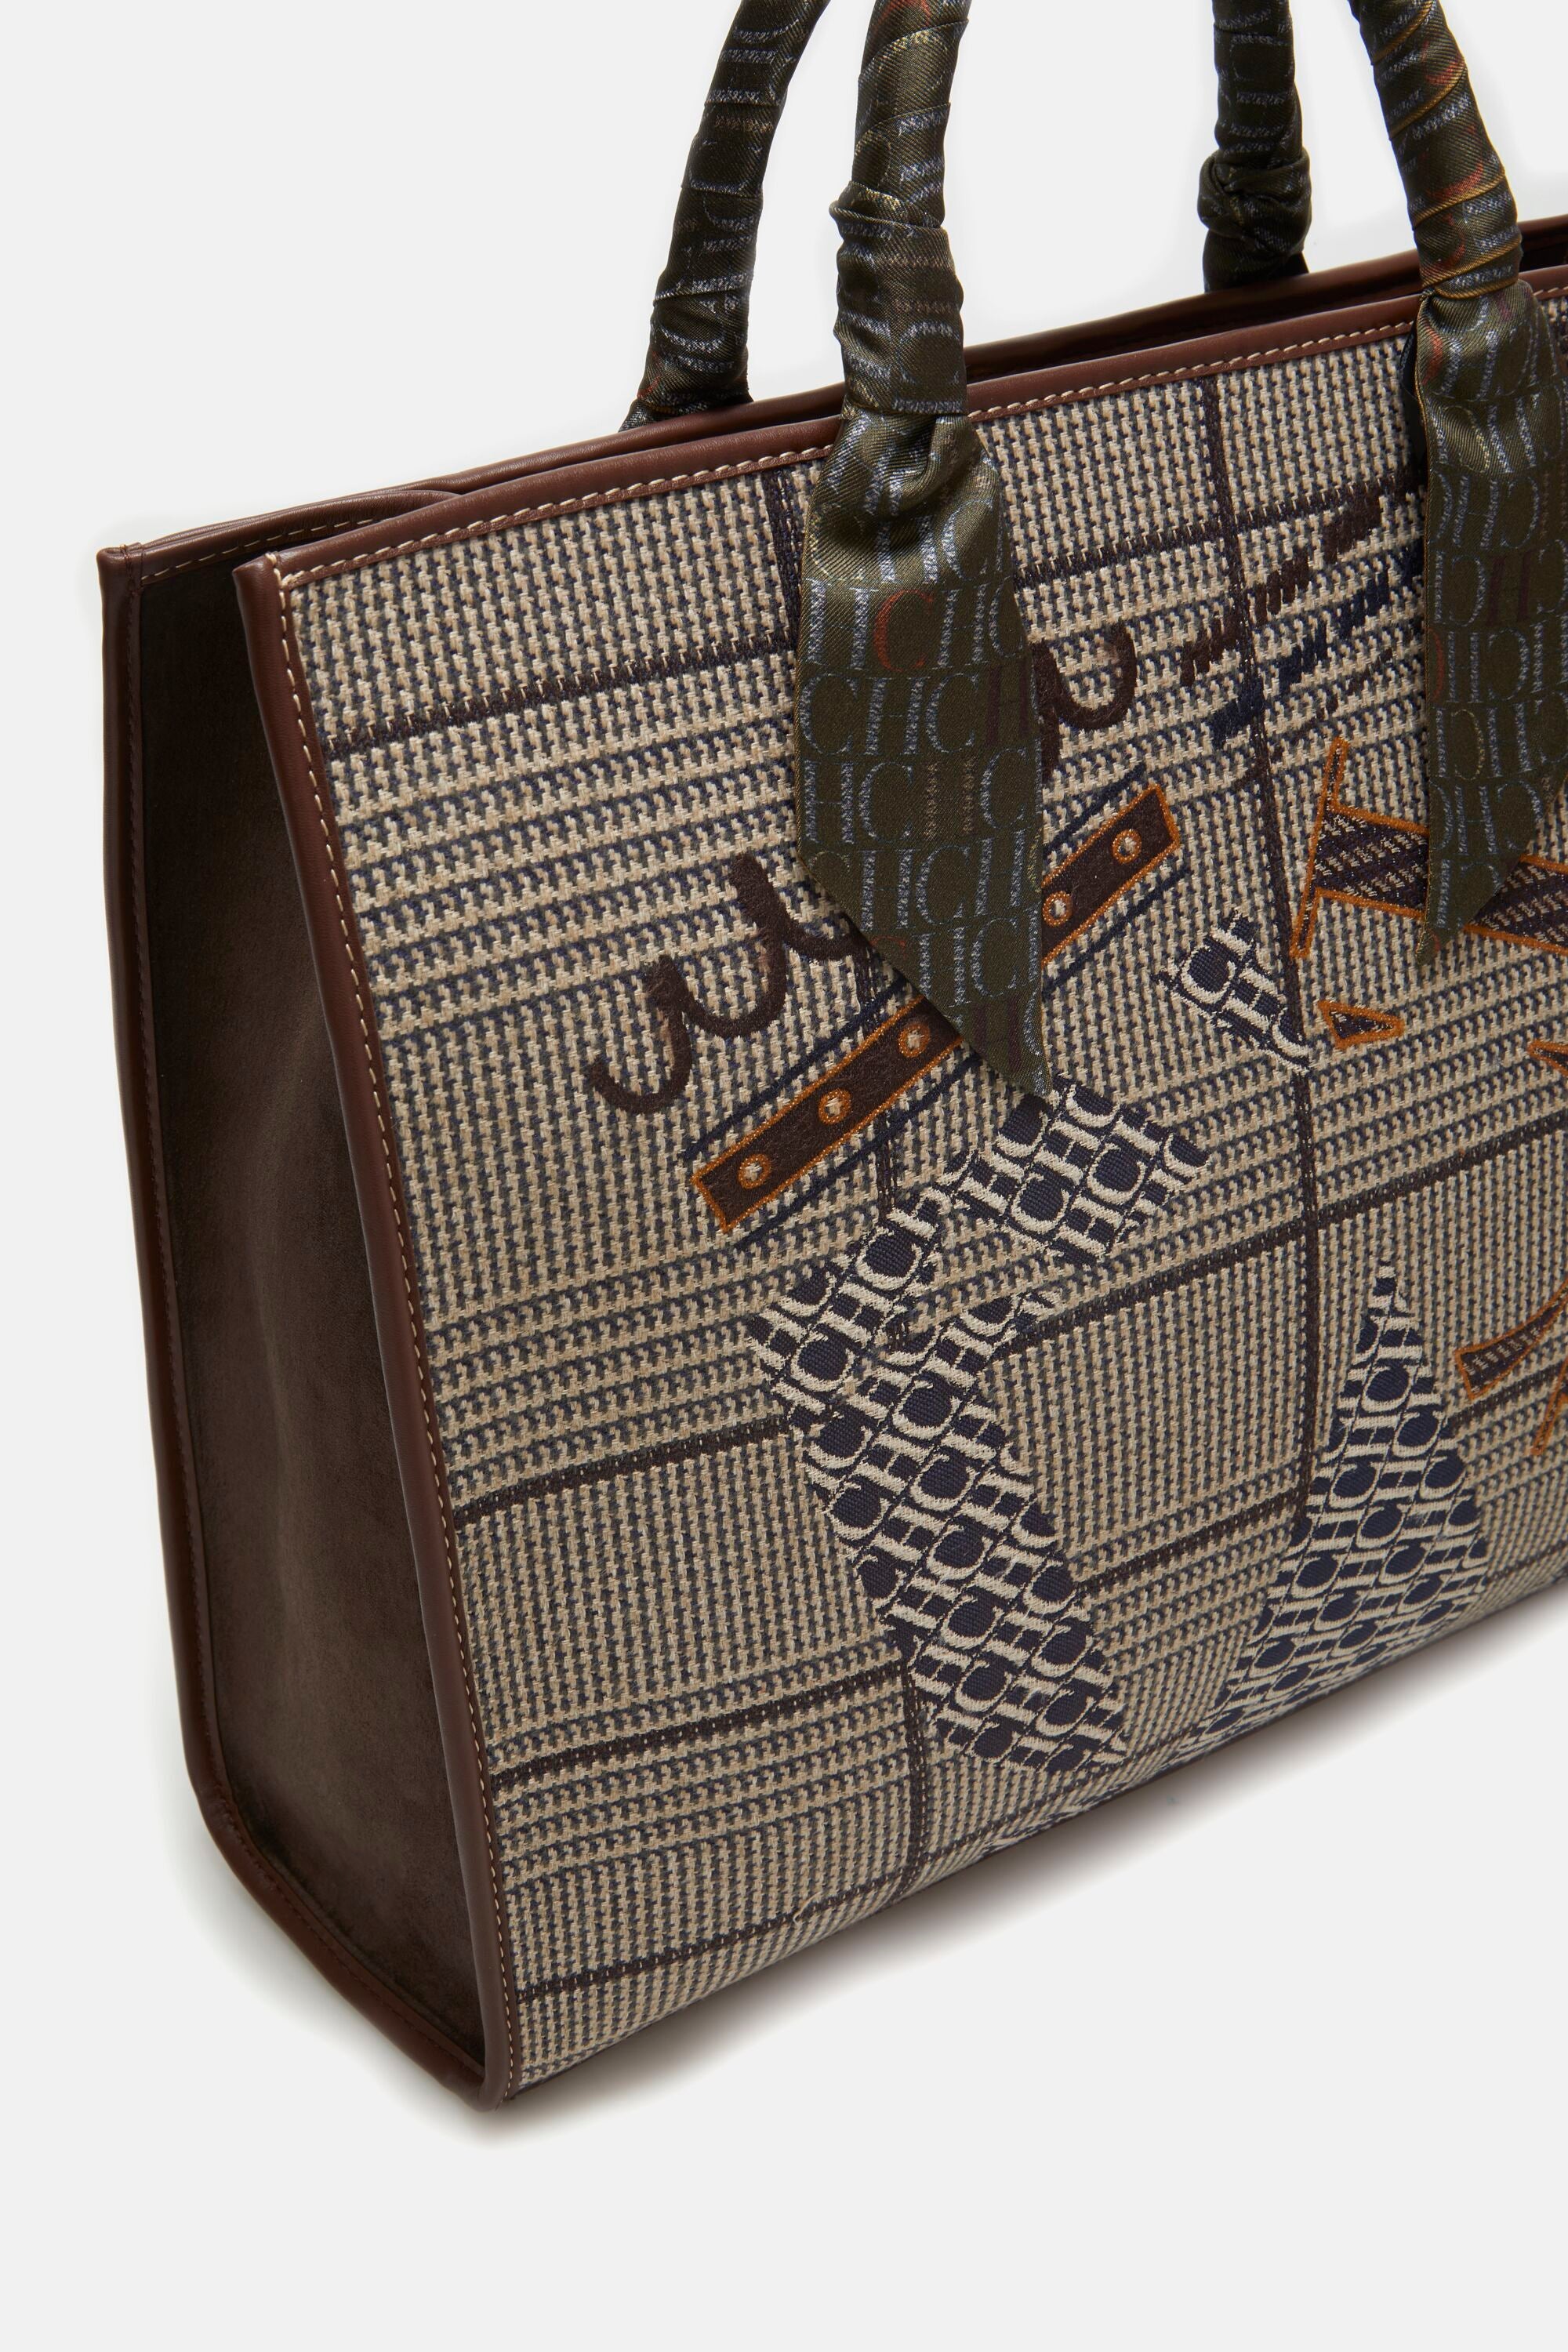 Elegant handbag mk bag For Stylish And Trendy Looks 